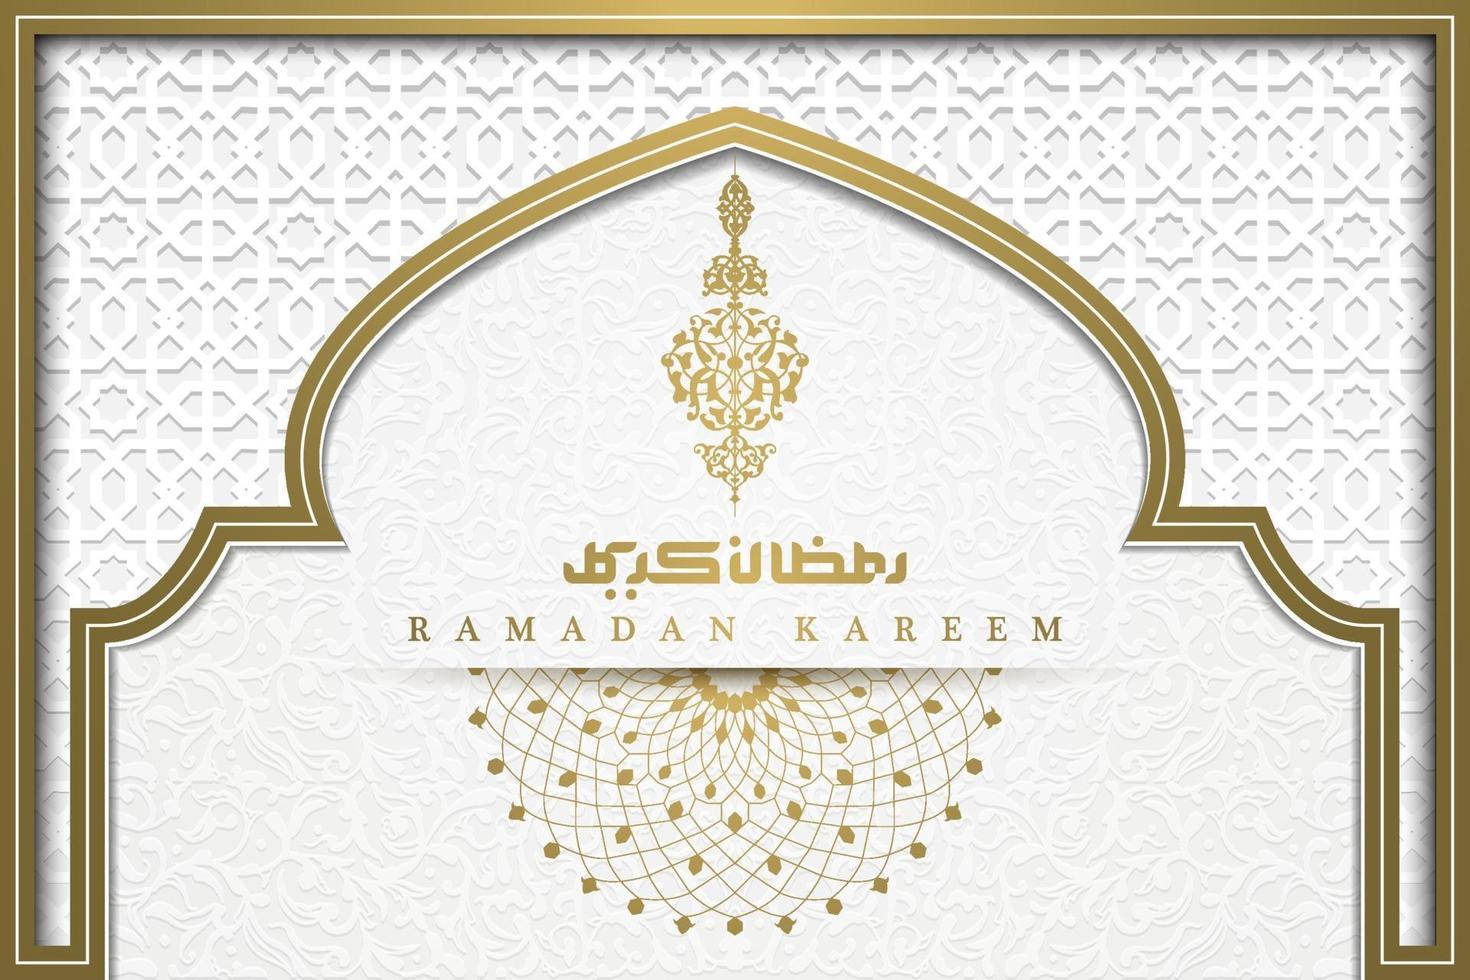 ramadan kareem salutation fond motif islamique vector design avec beau croissant et calligraphie arabe